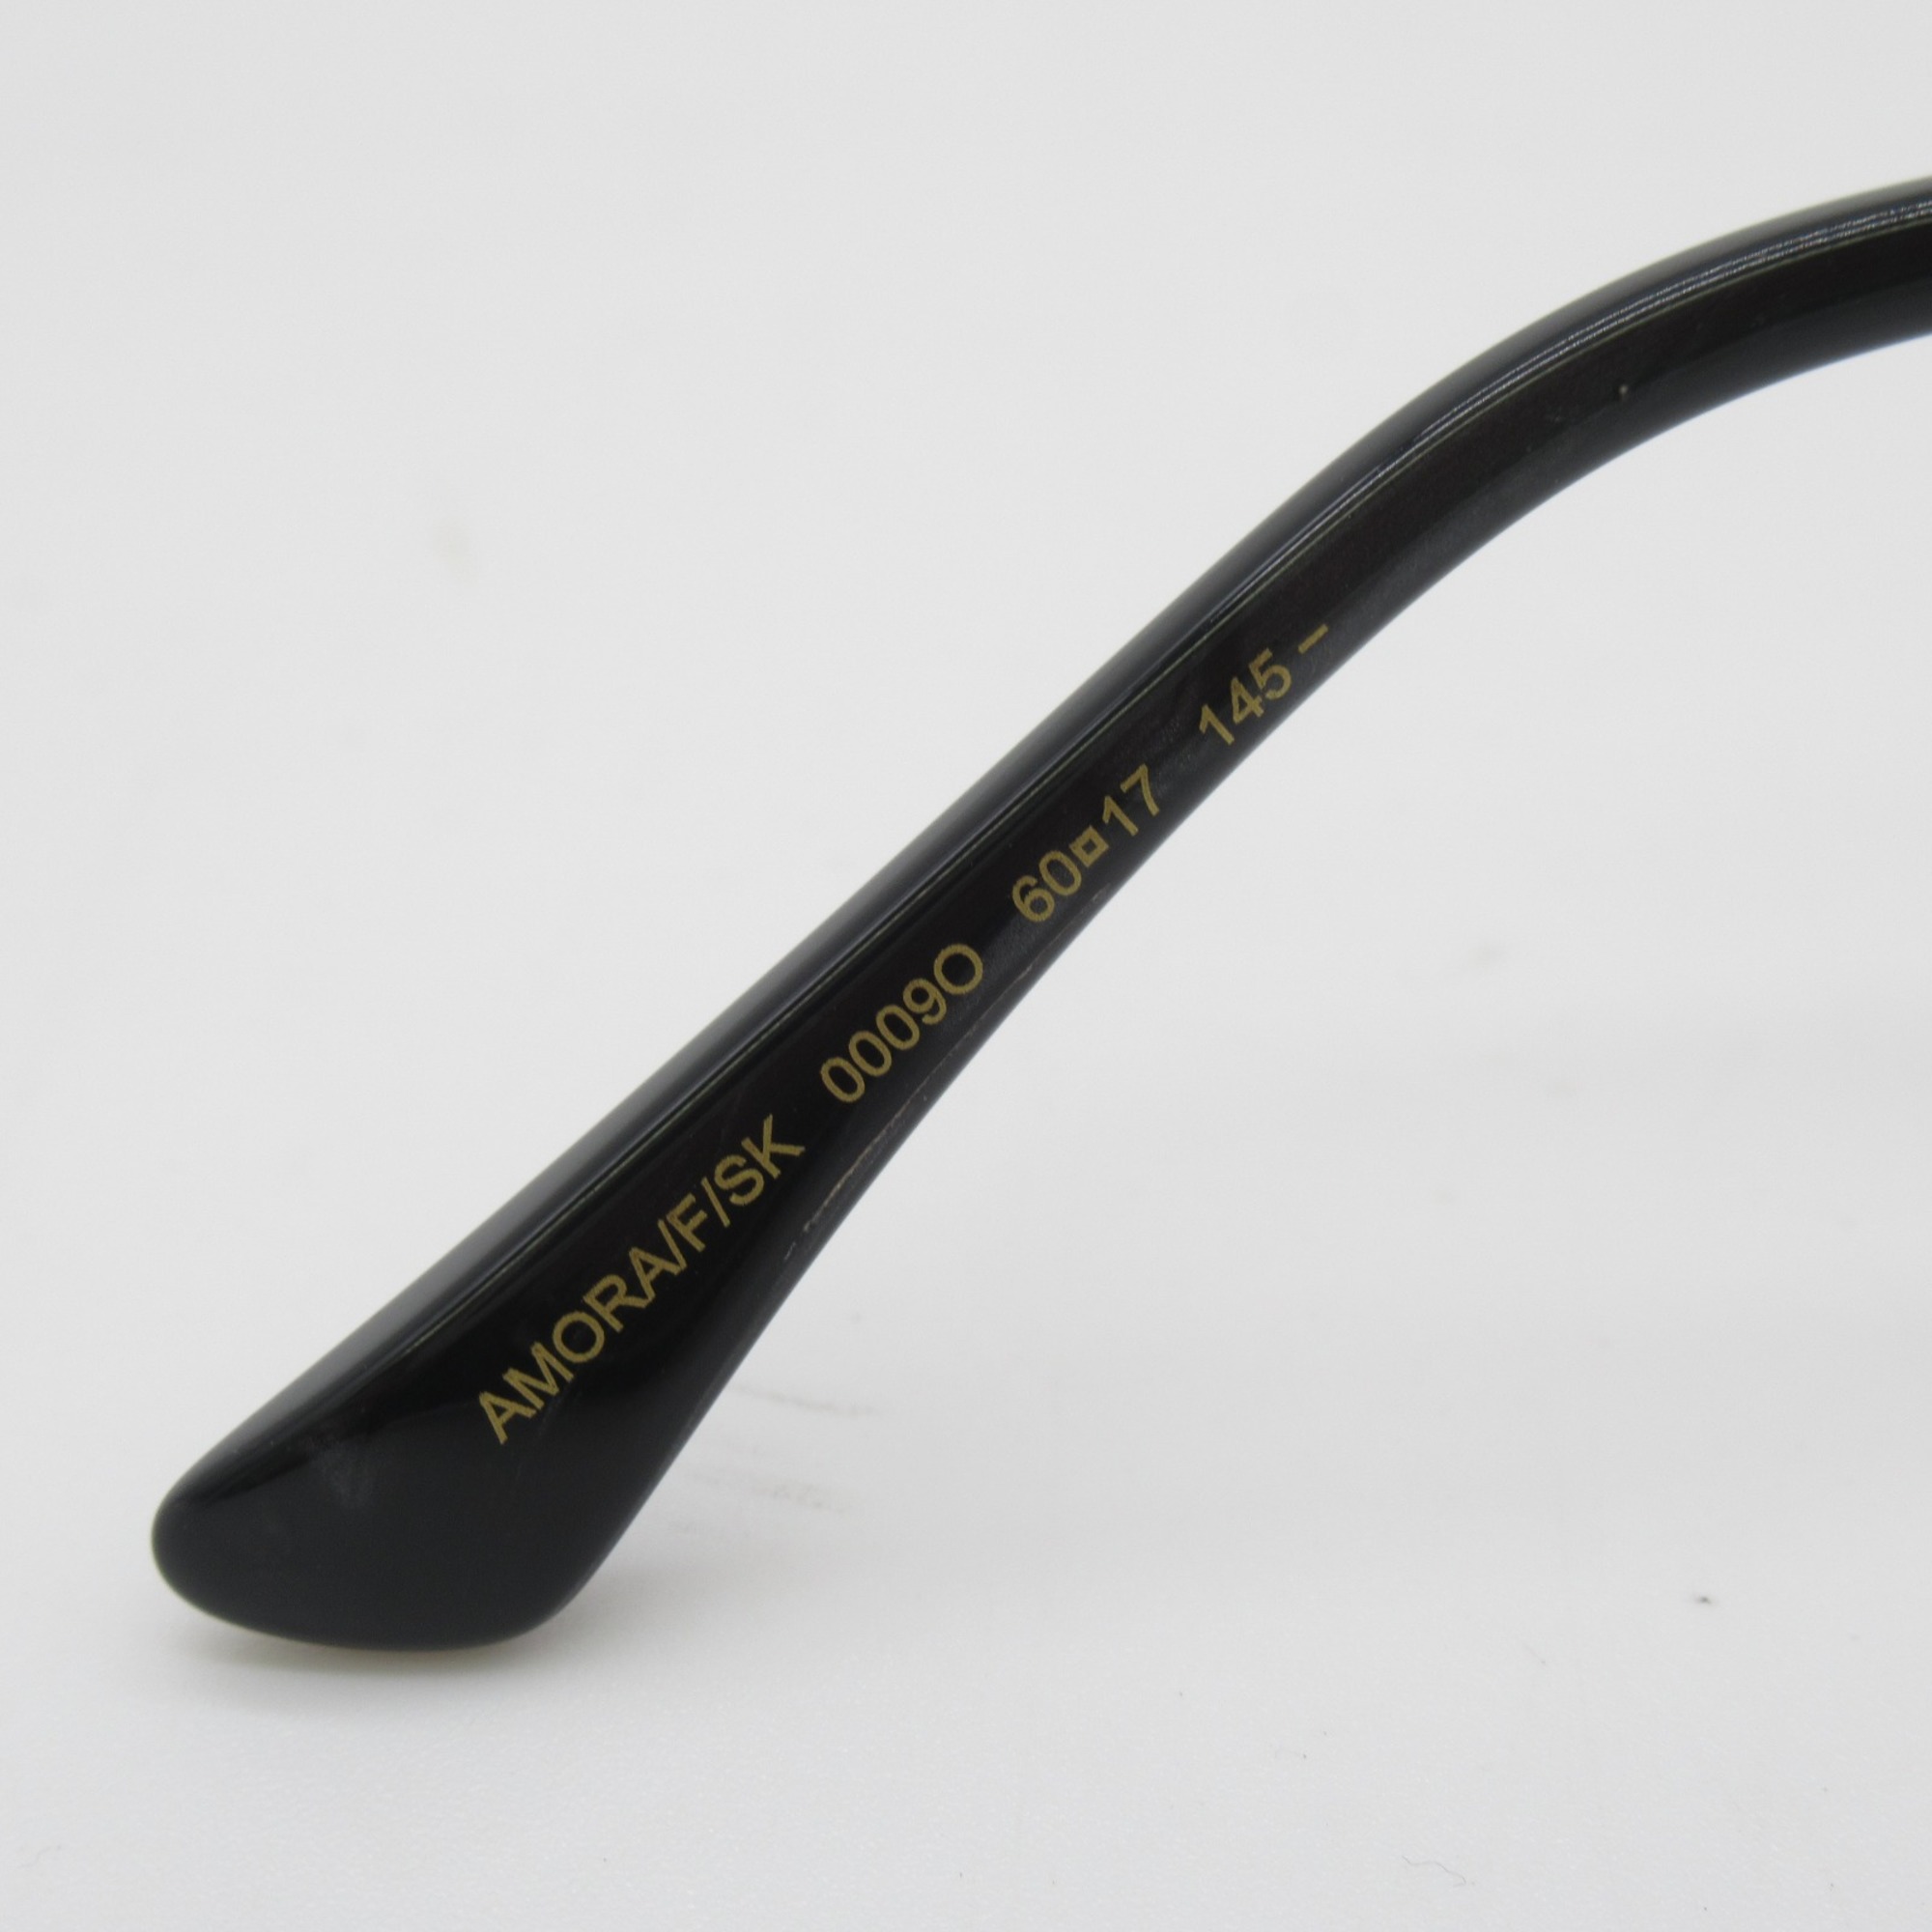 JIMMY CHOO sunglasses Black Plastic Nickel alloy AMORA/F/SK 000/9O